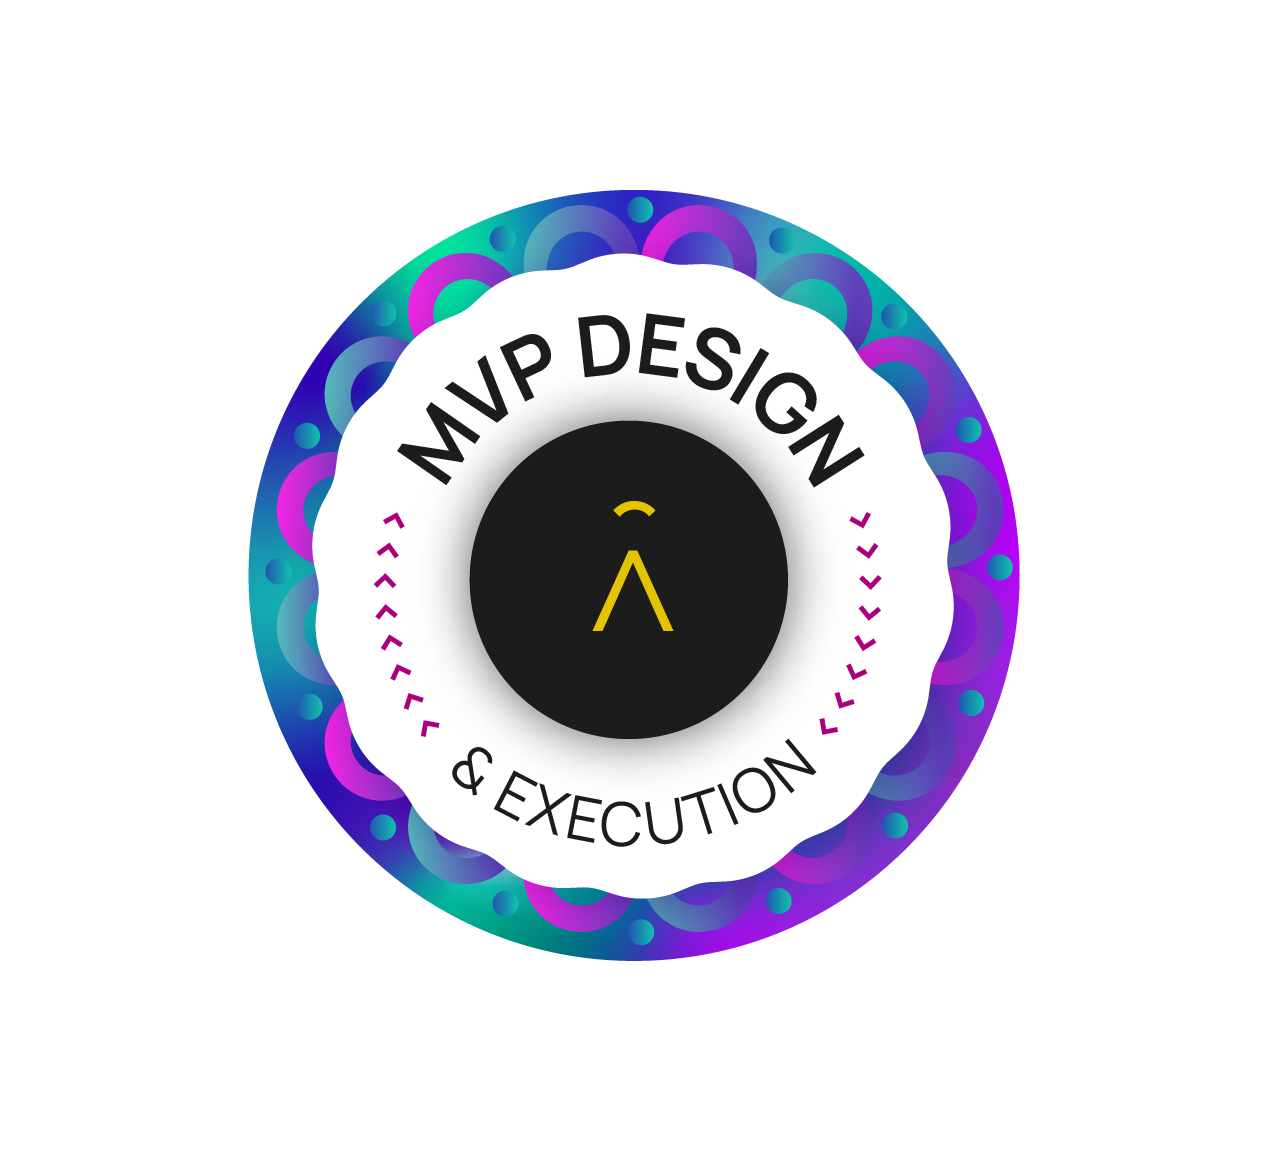 MVP Design & Execution